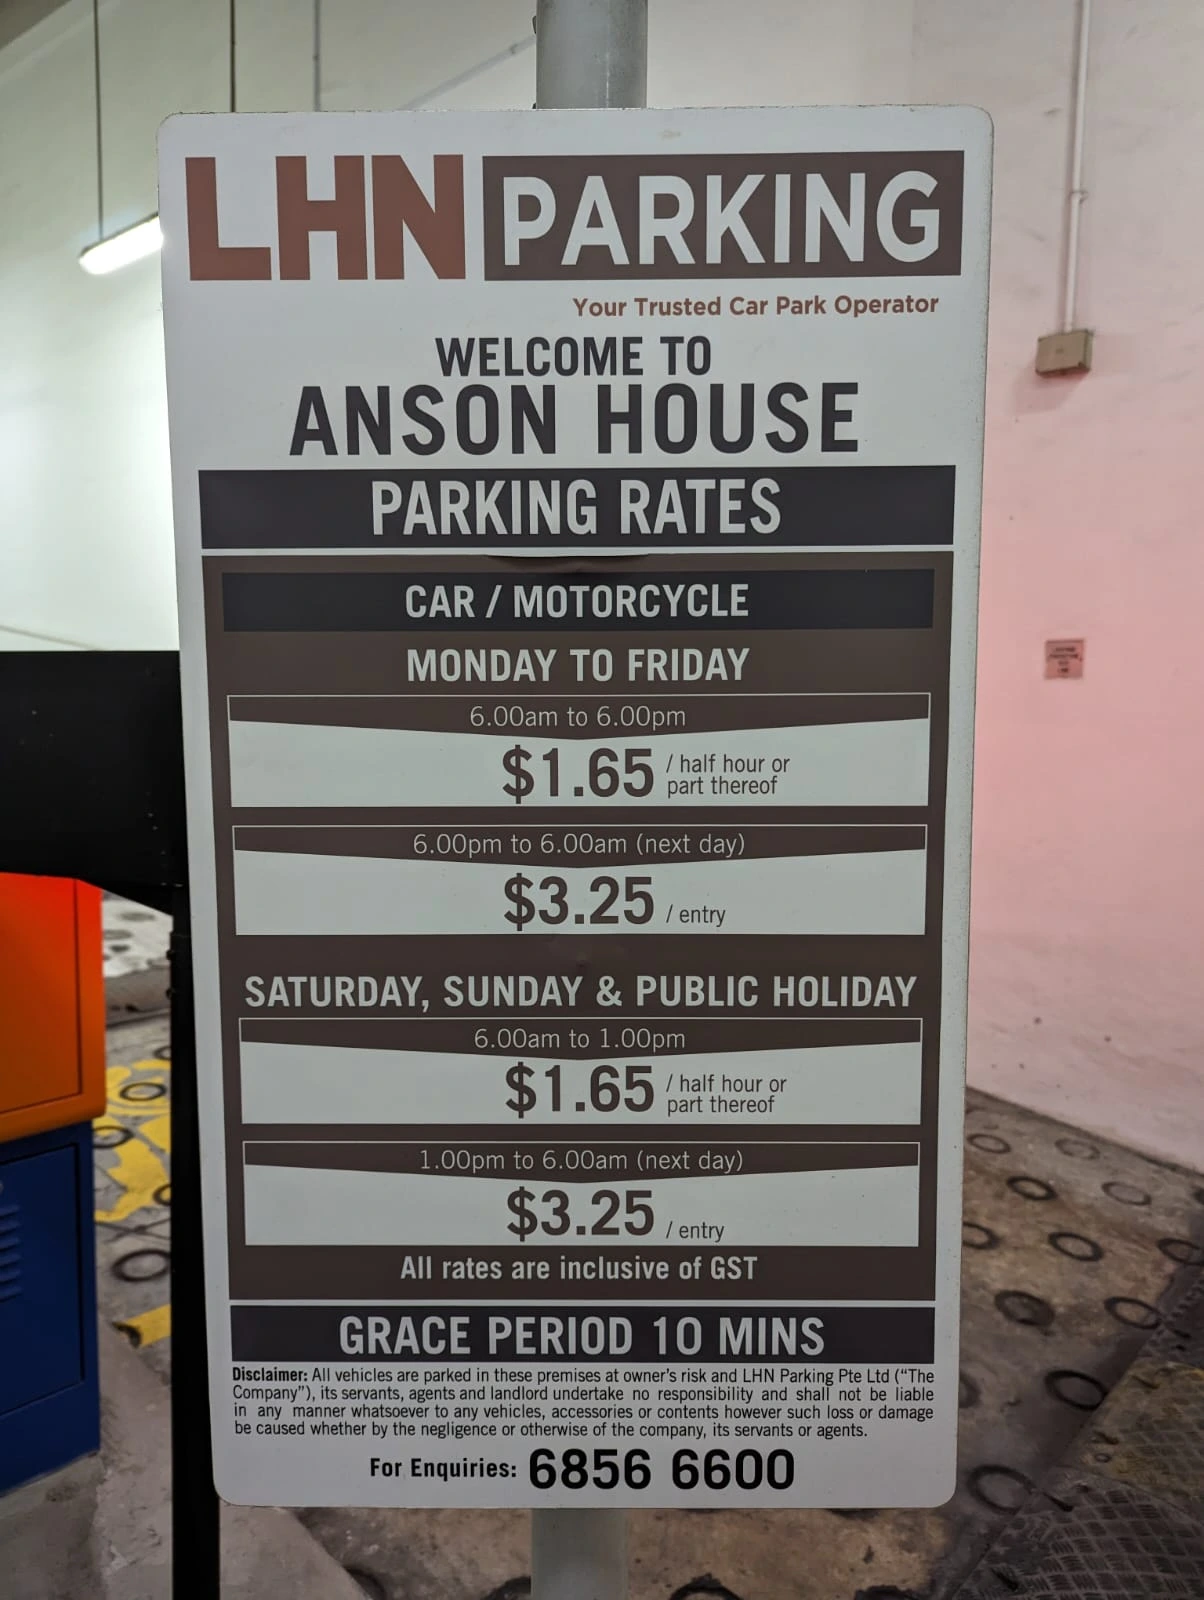 Parking rates for Anson House carpark